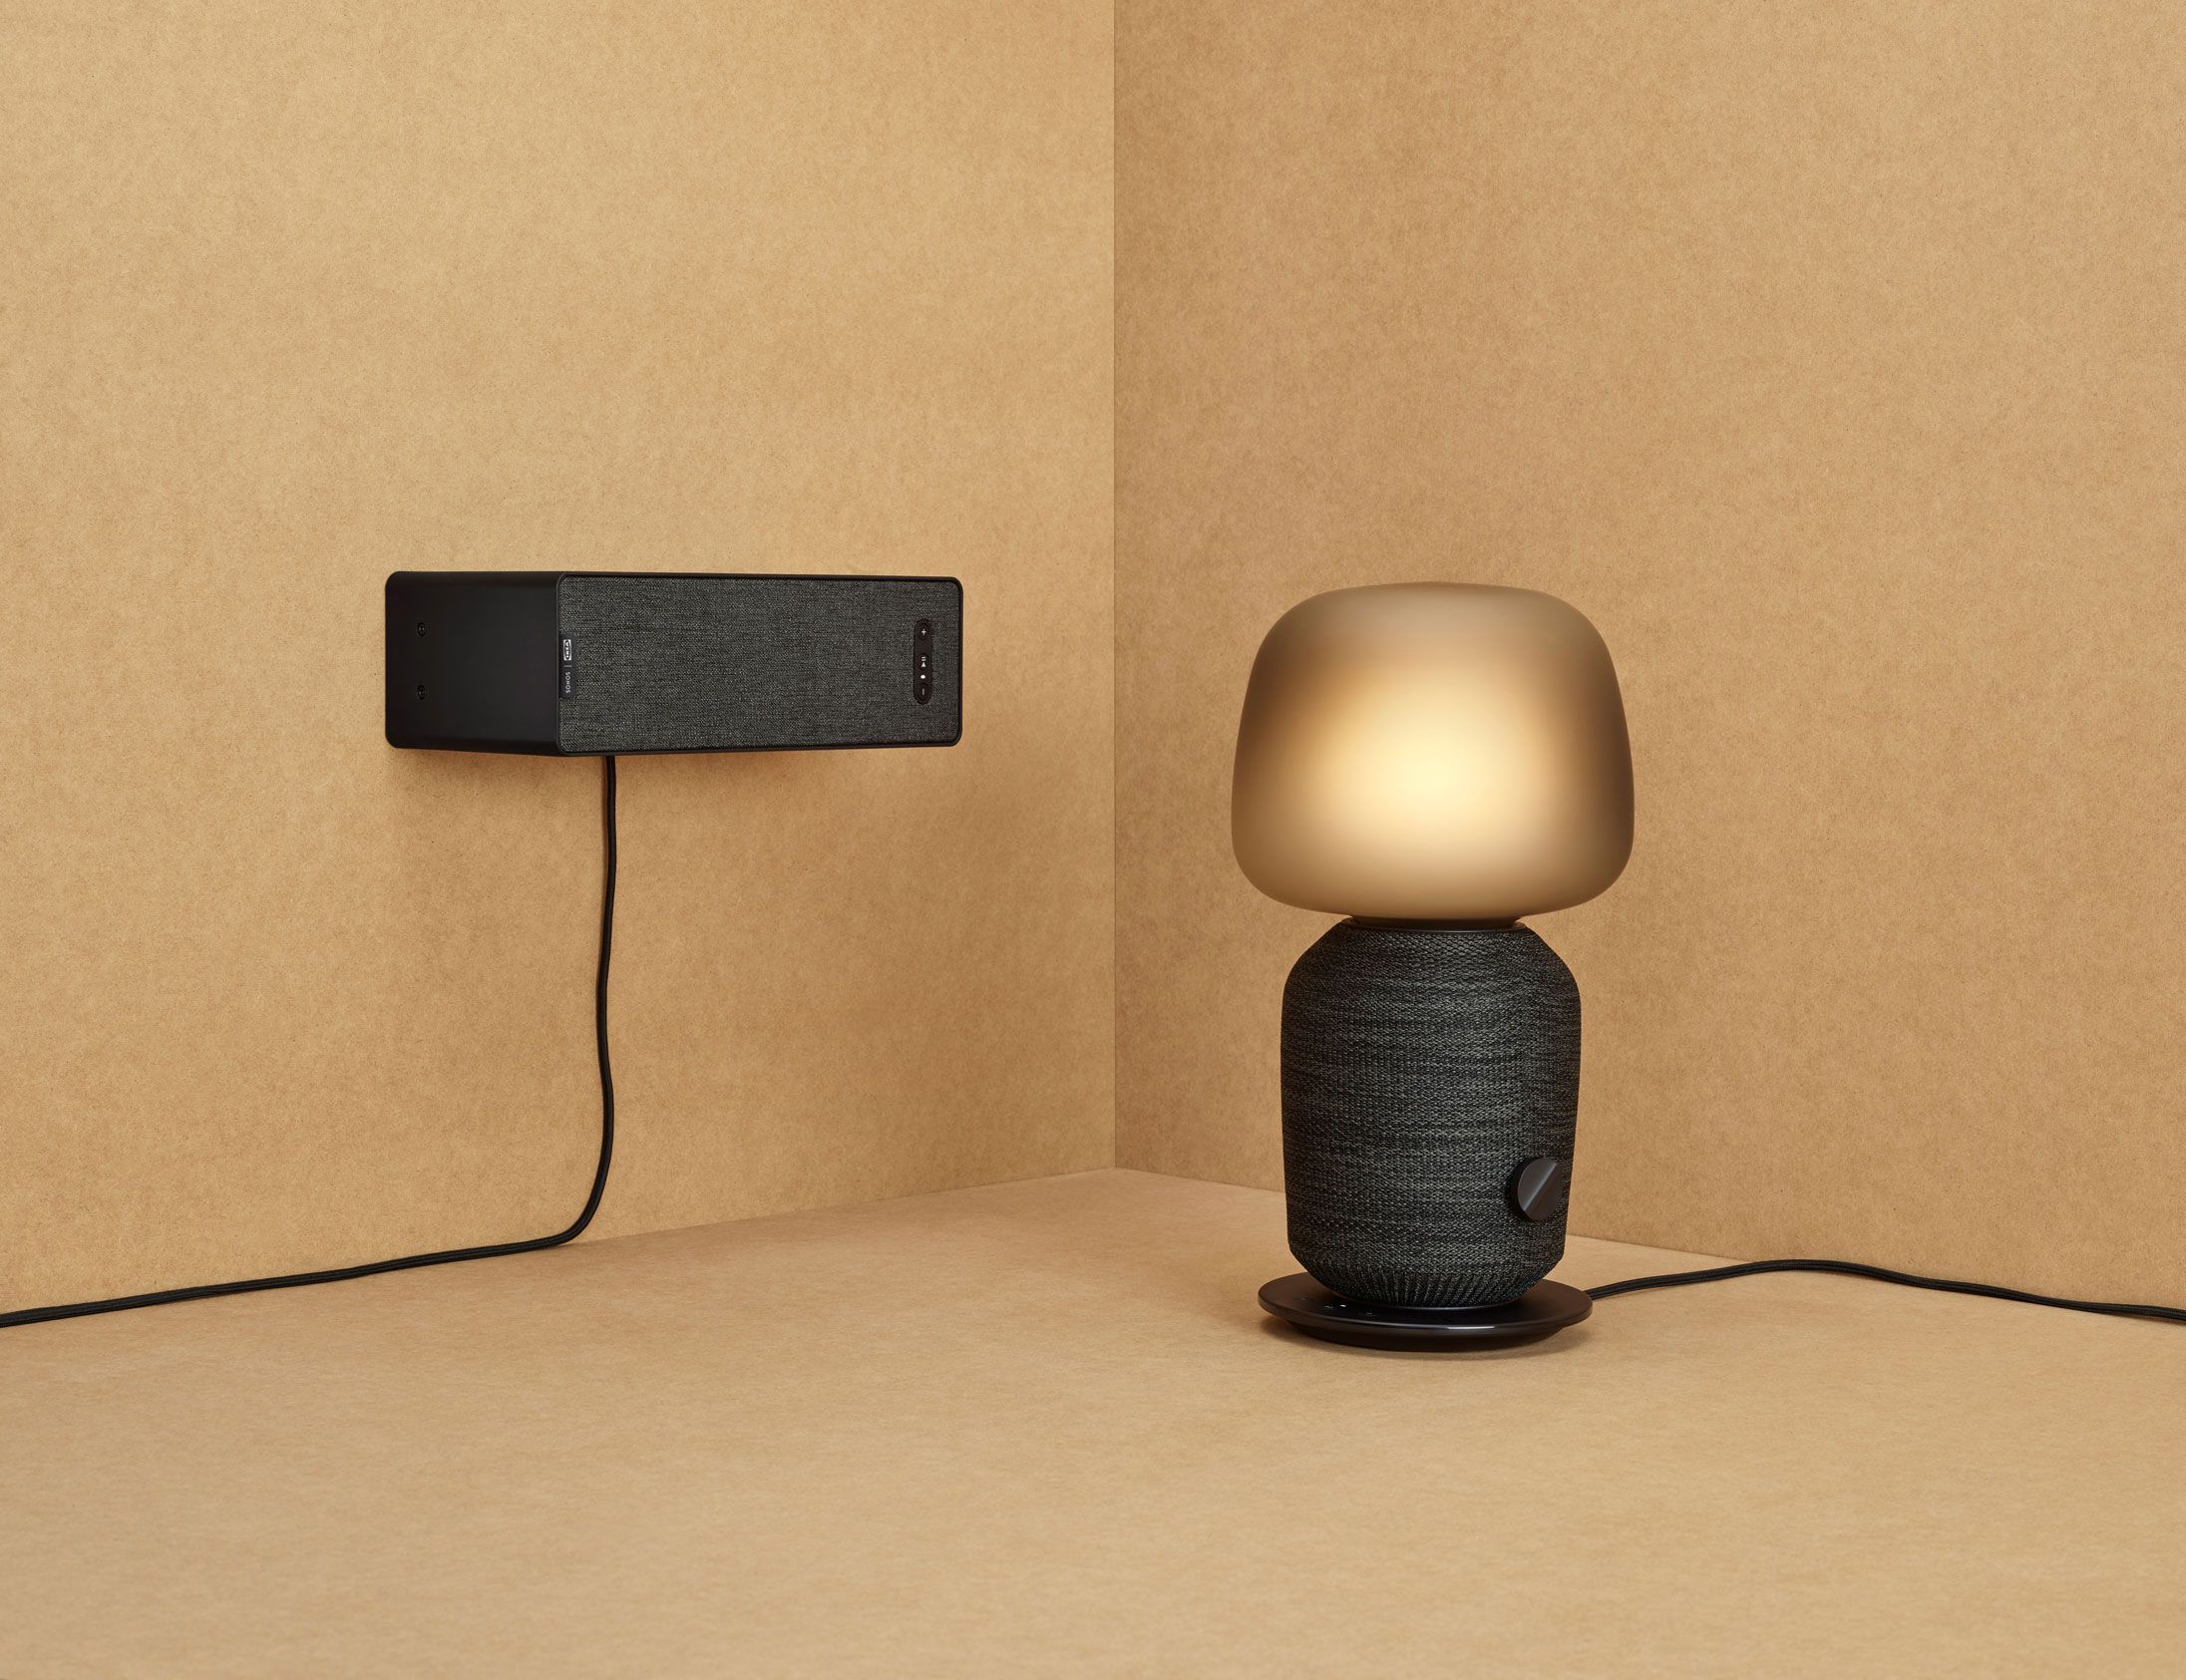 Ikea Speaker Review - Symfonisk Sound System